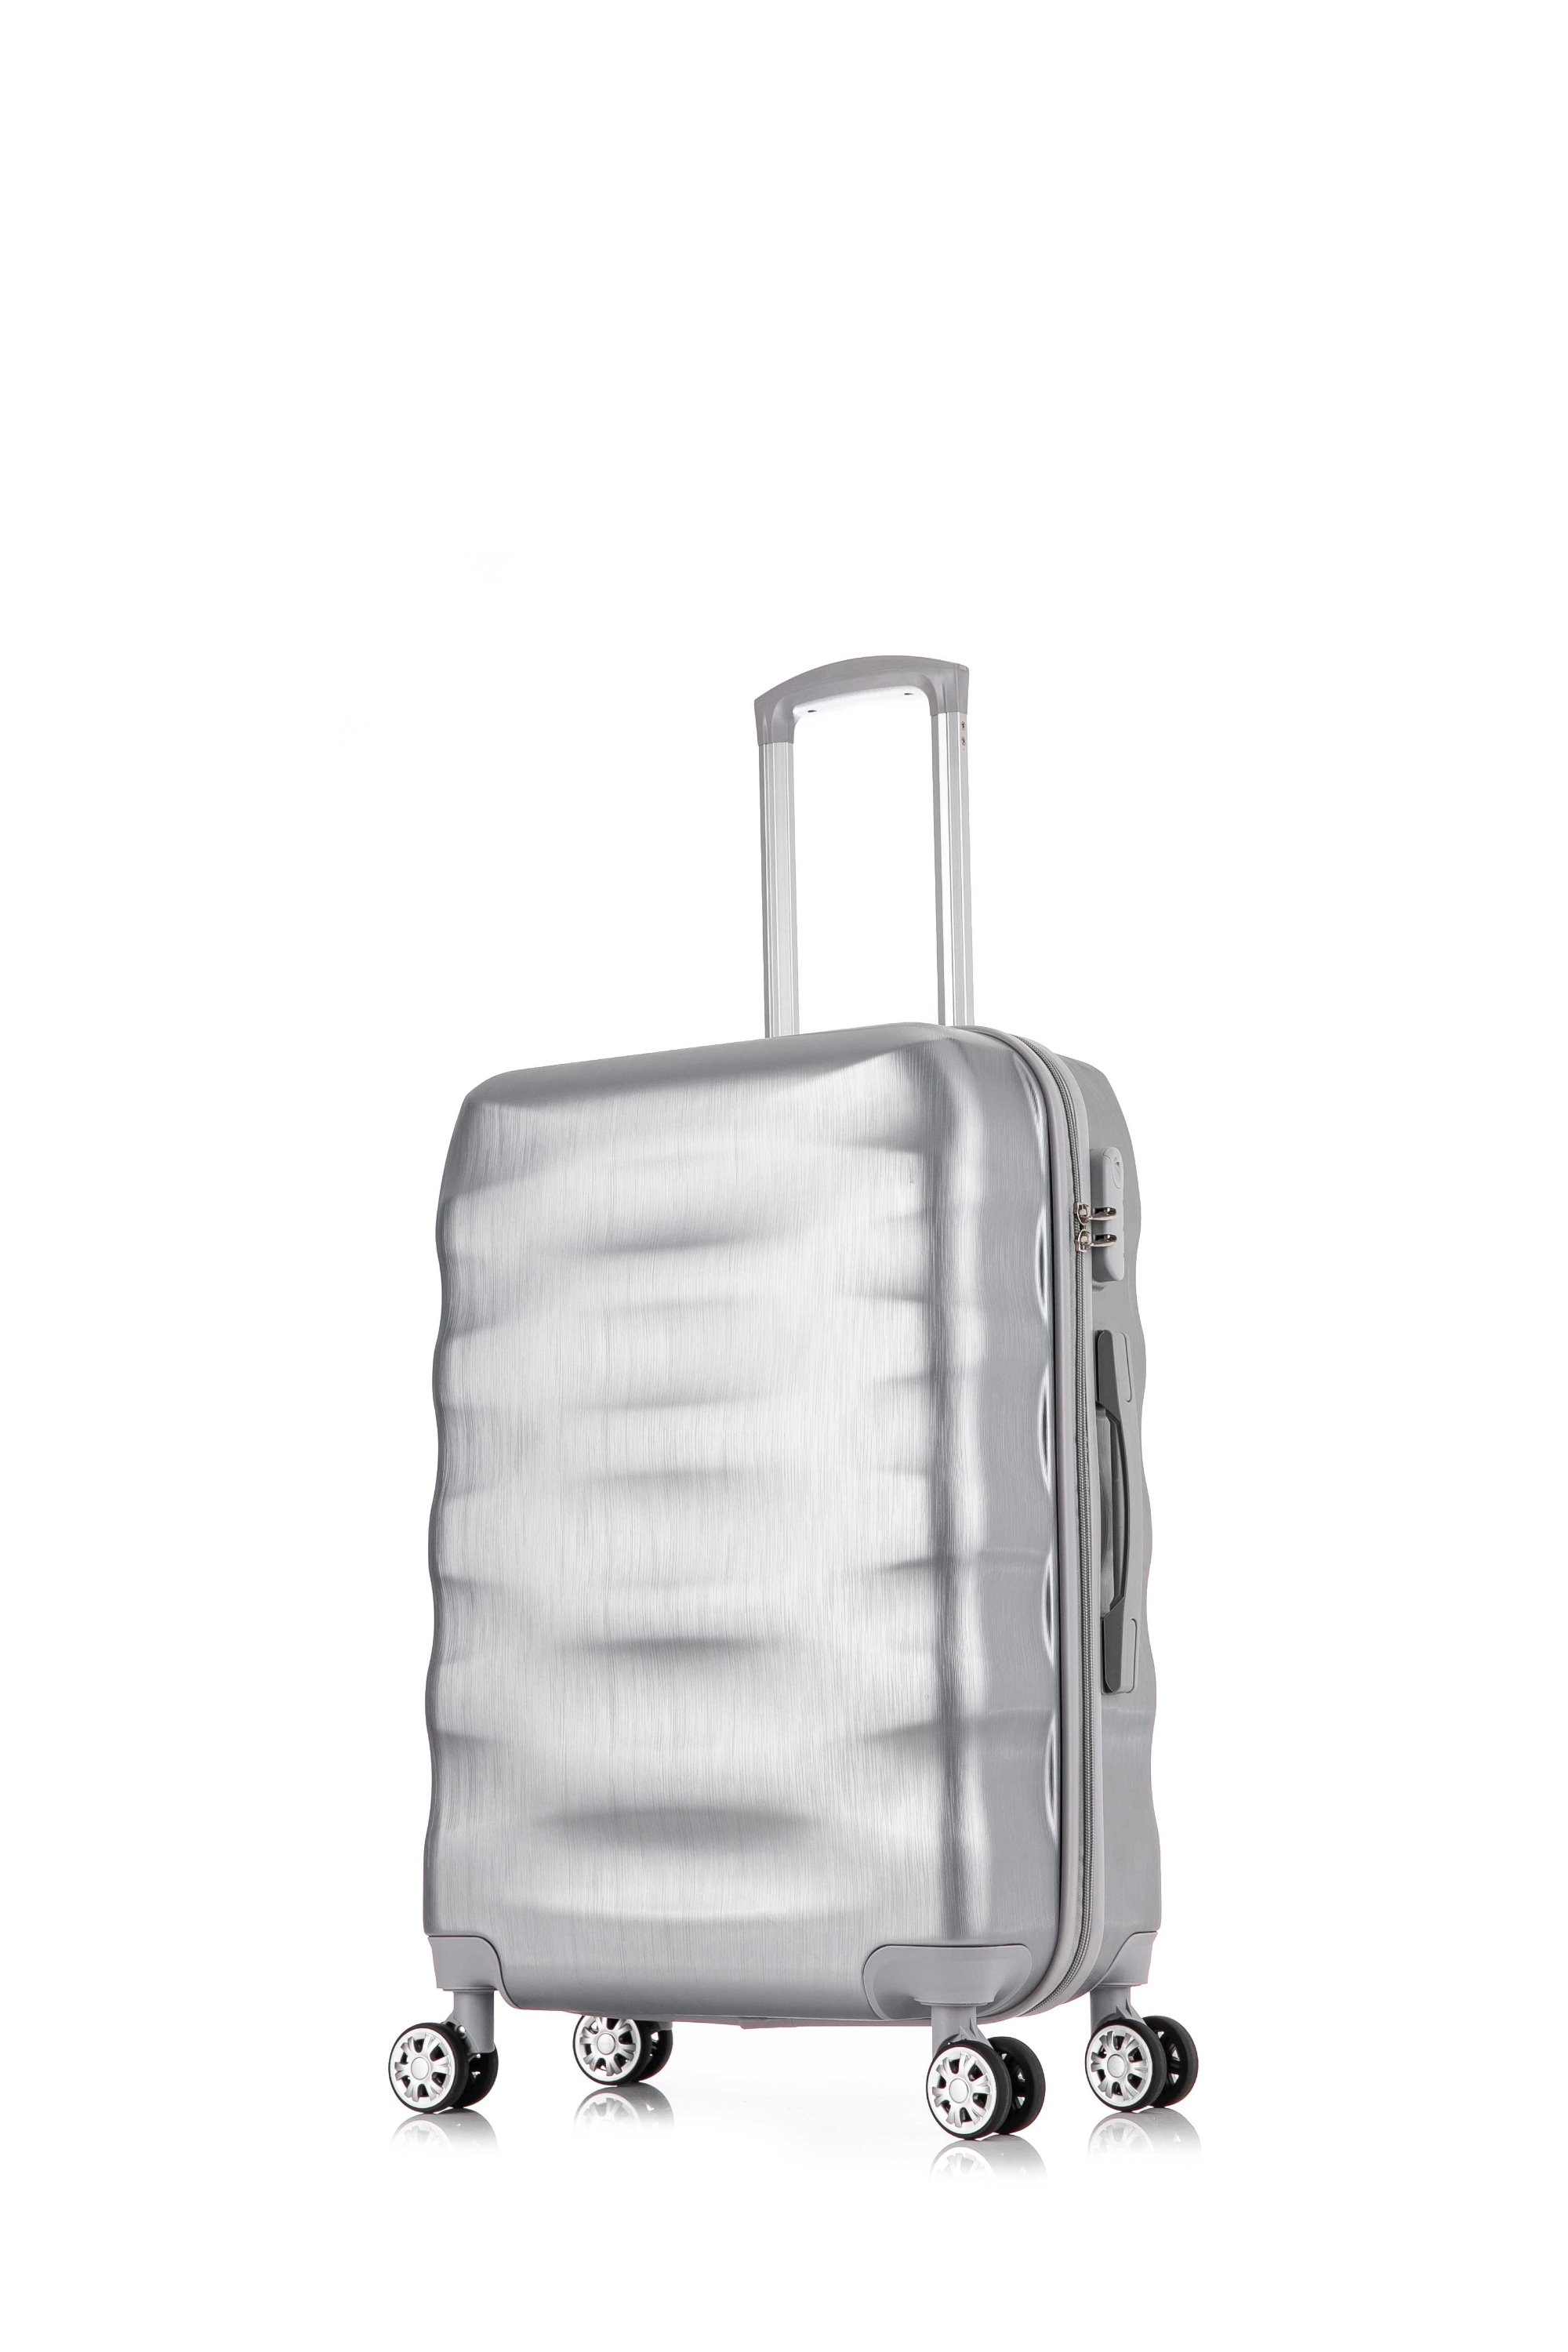 Traveler's Choice - ABS Luggage - 1004